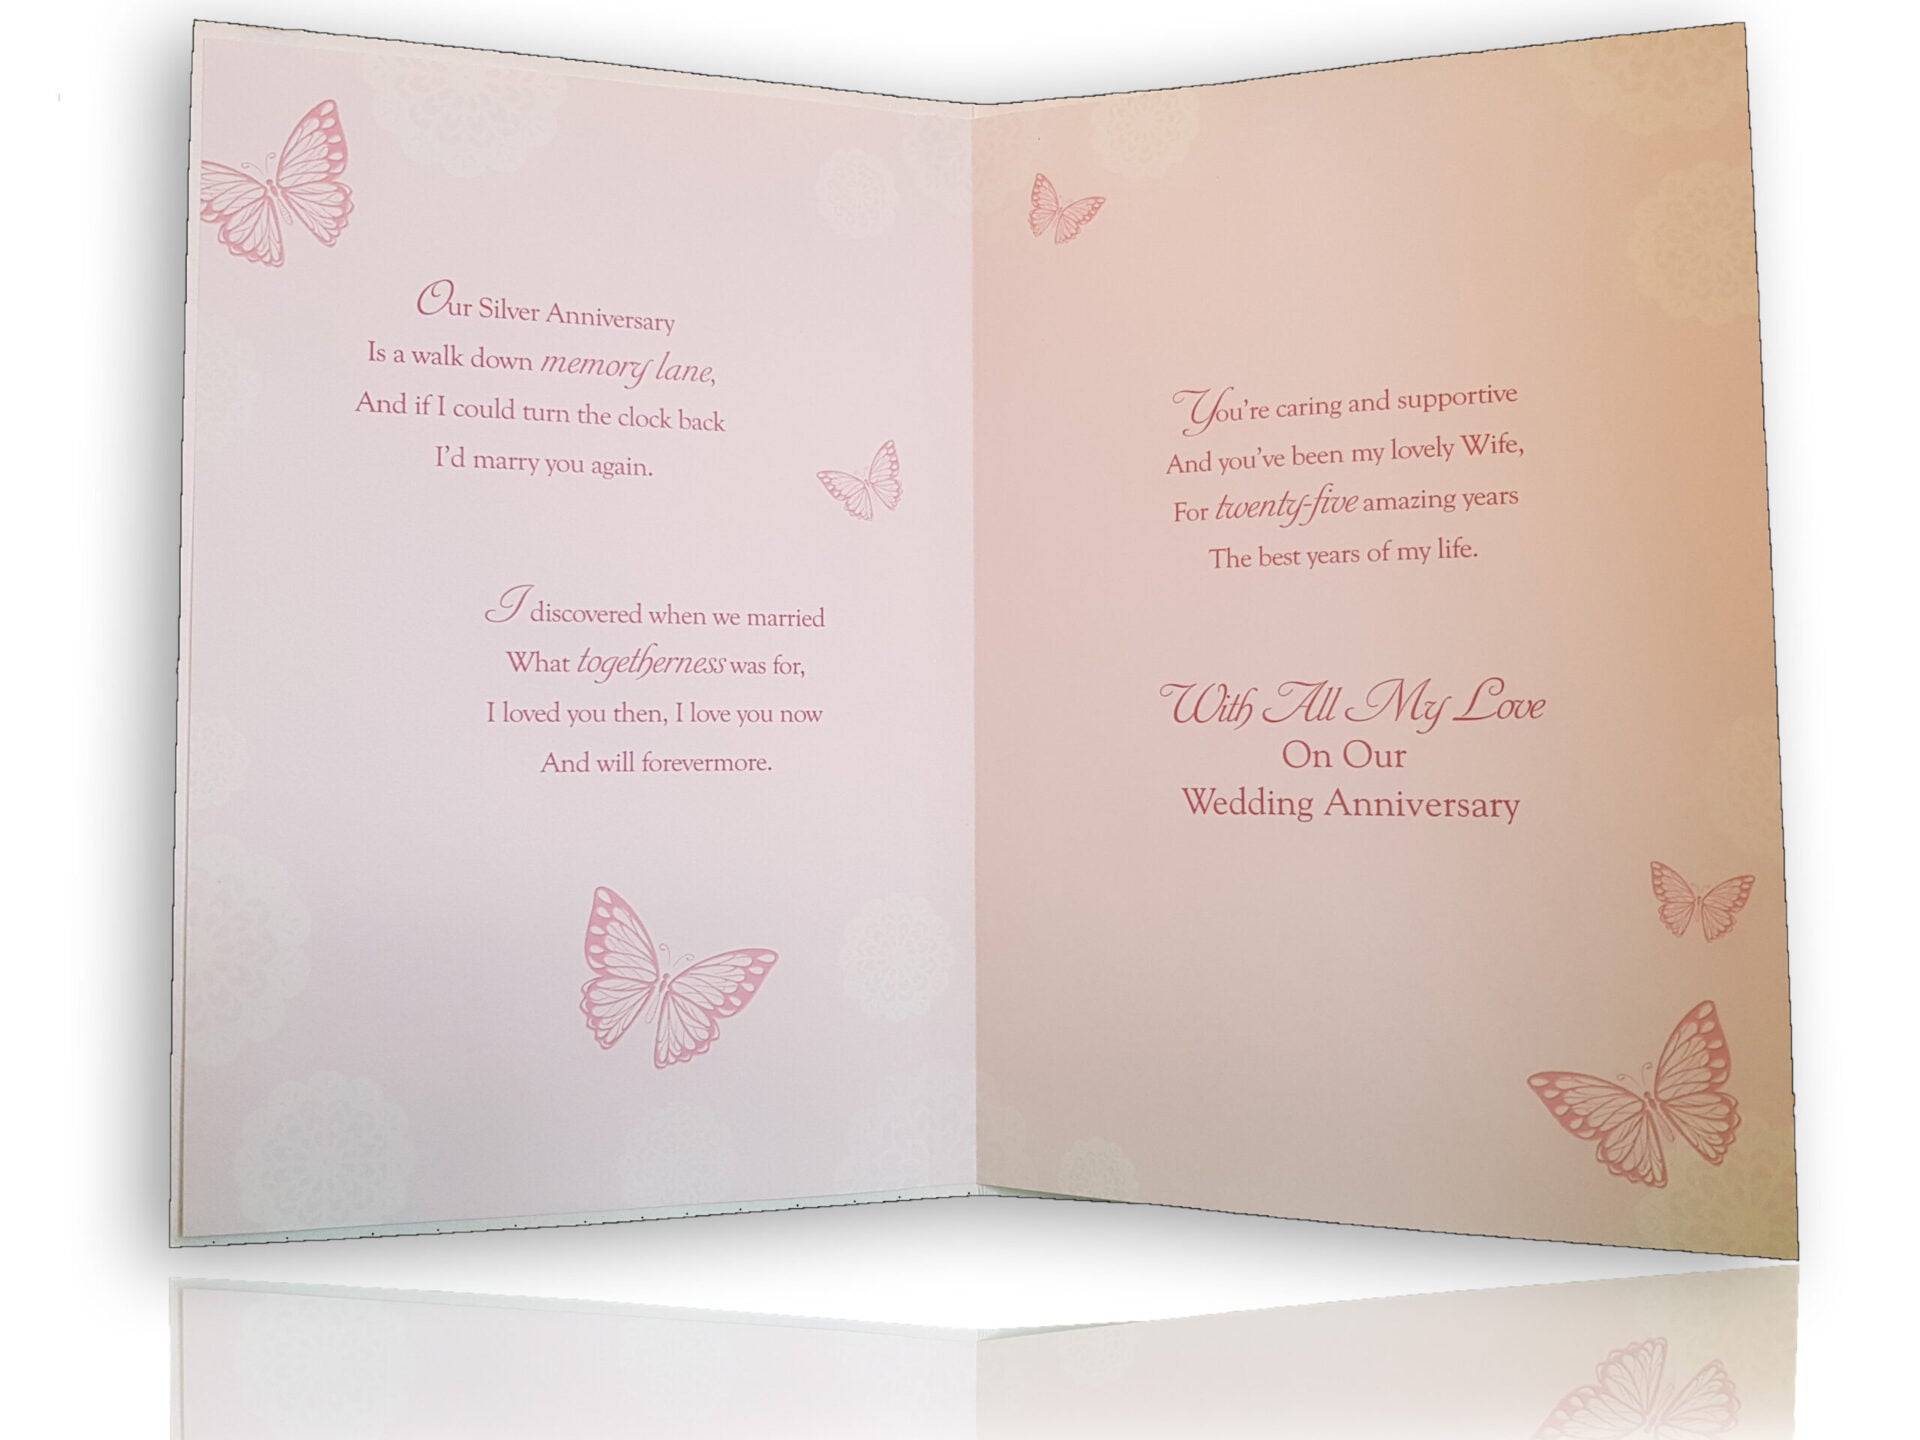 Wife 25th Wedding Anniversary Card - Heartfelt Tribute Of Love